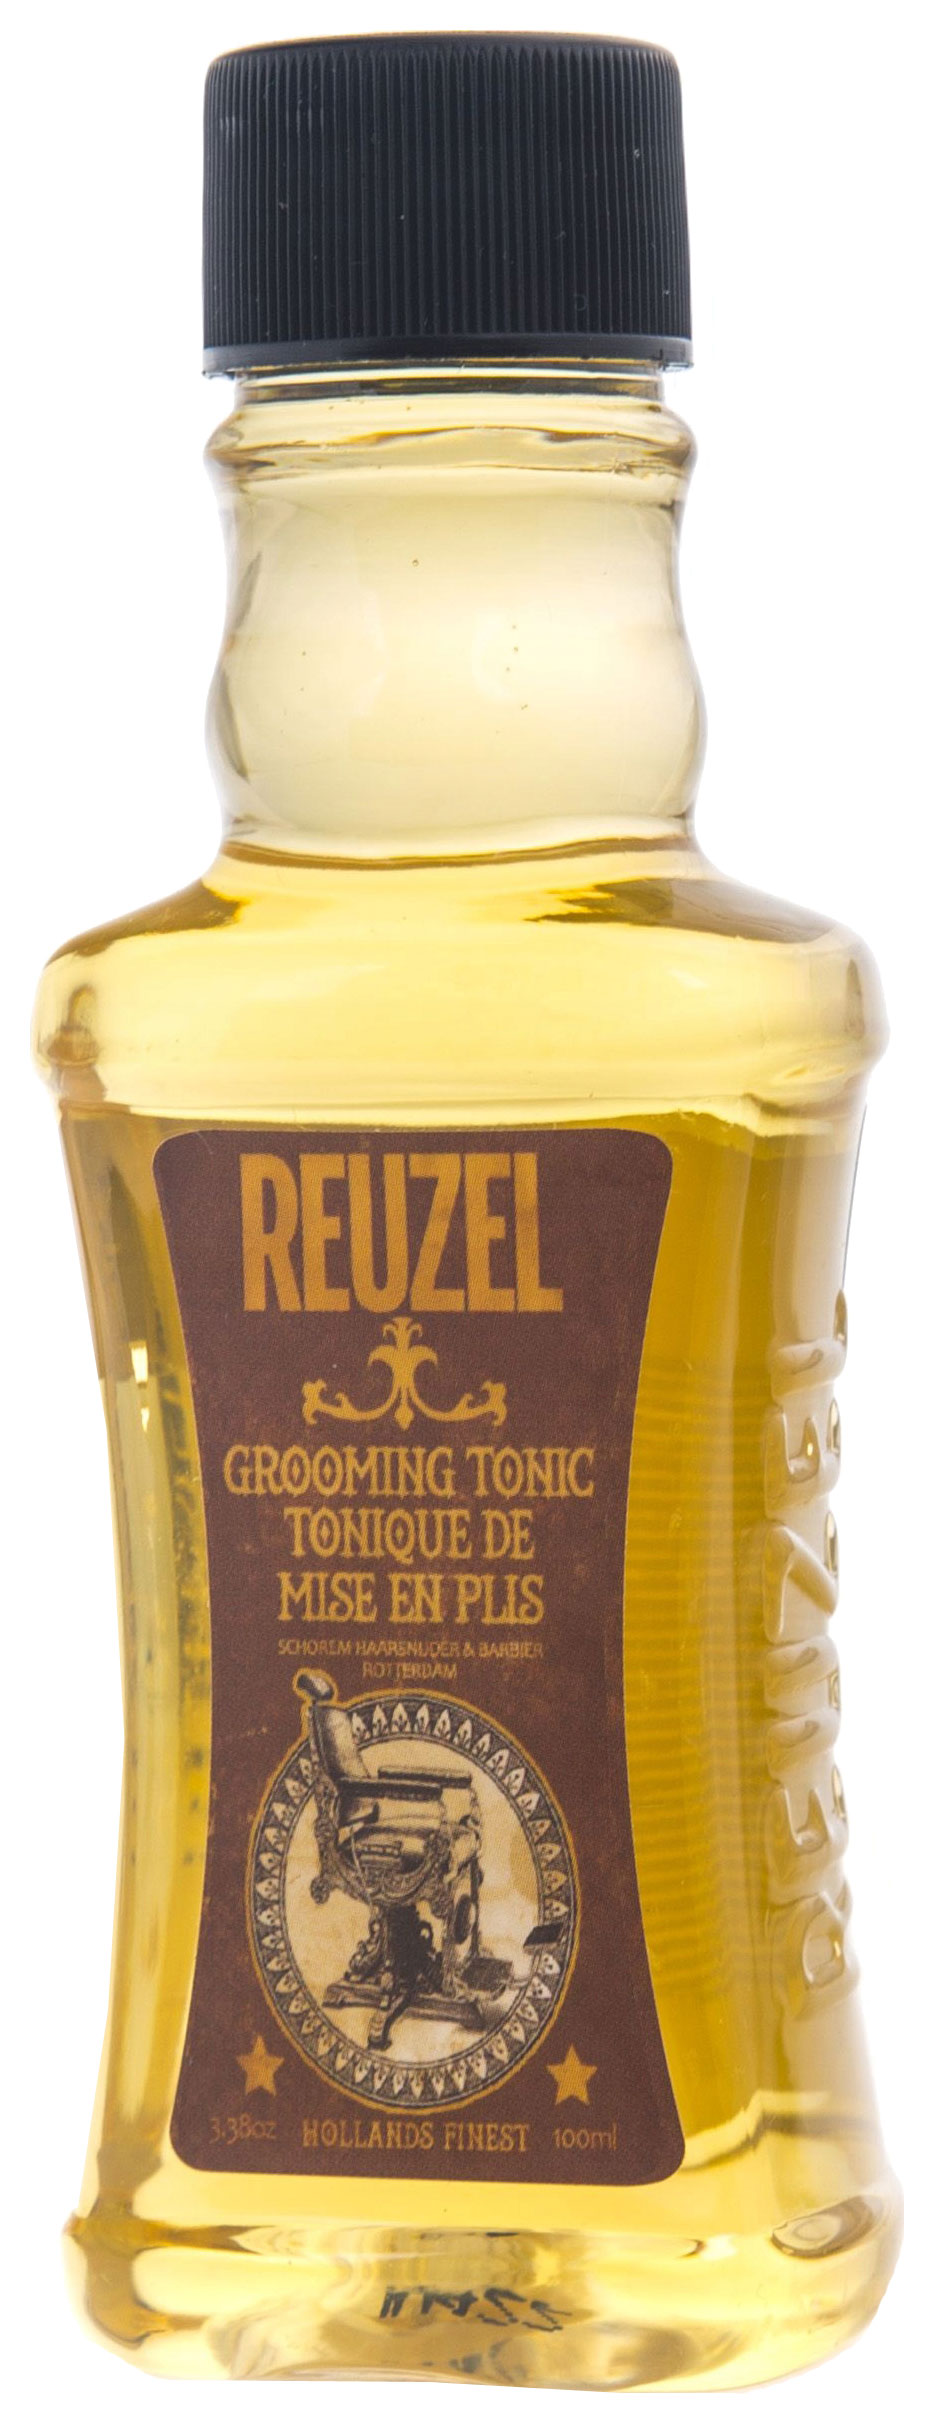 фото Тоник для укладки reuzel grooming tonic, 100 мл